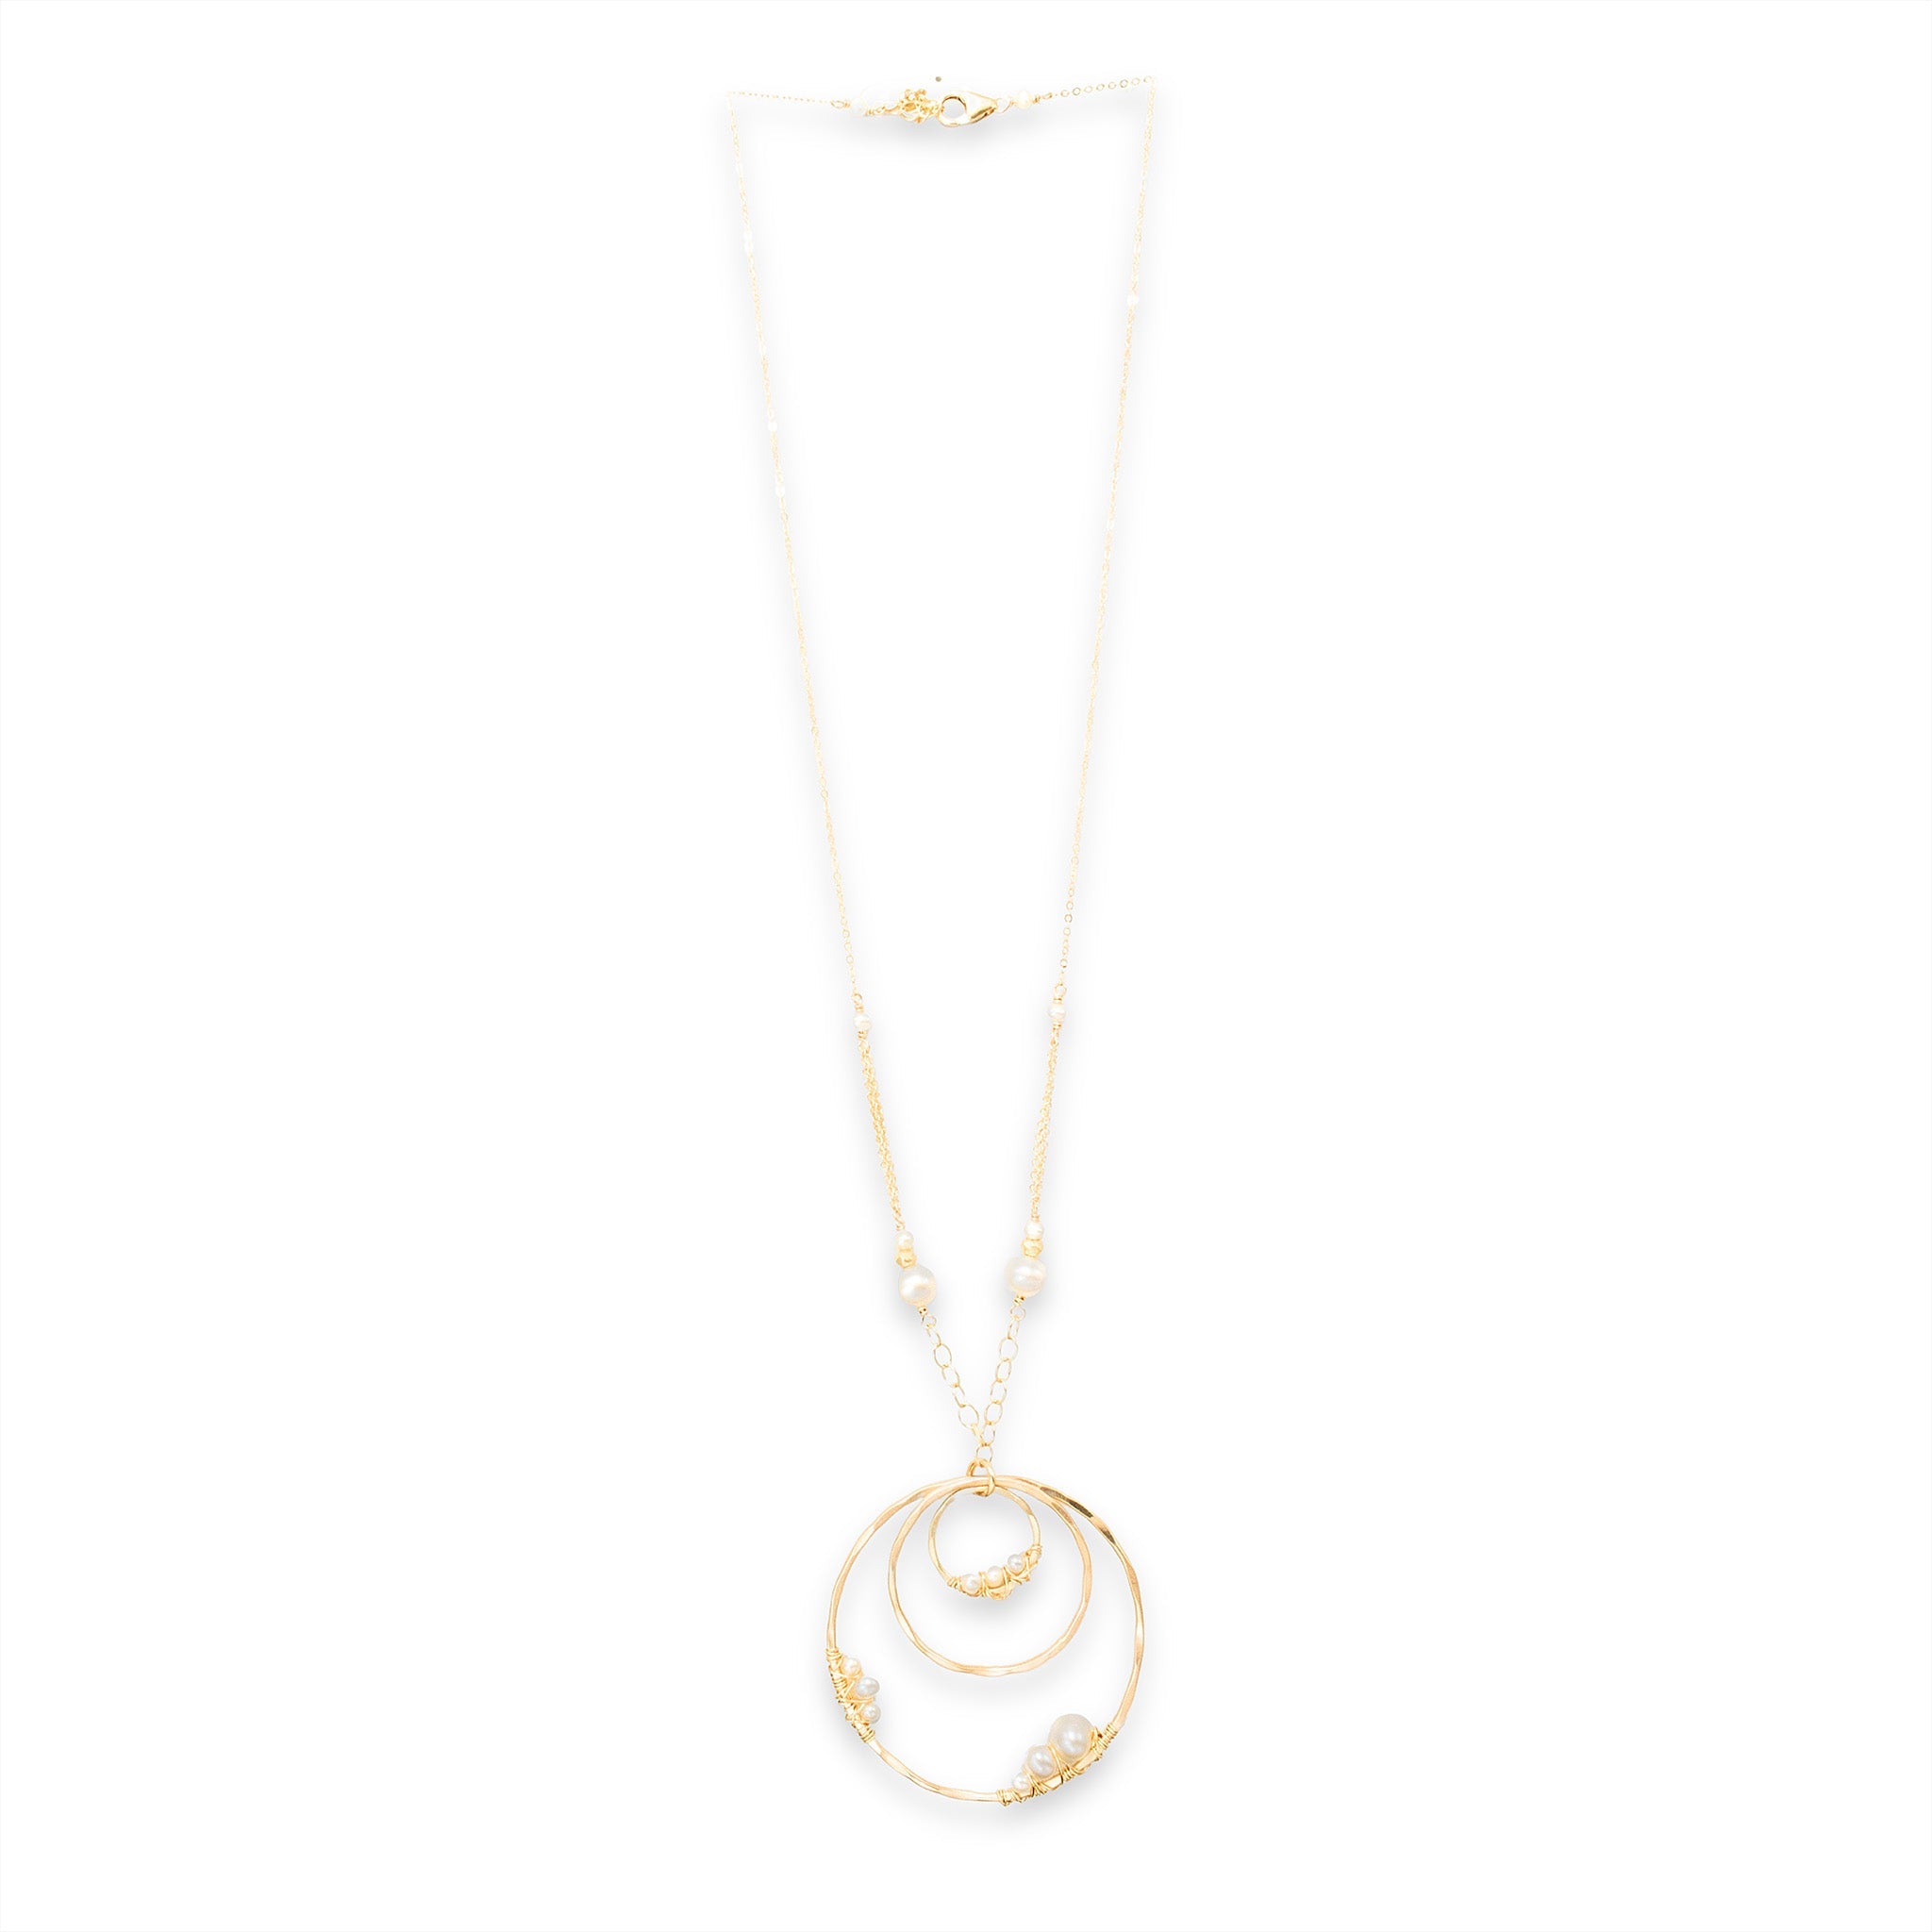 Celestial Circles Necklace - Necklaces